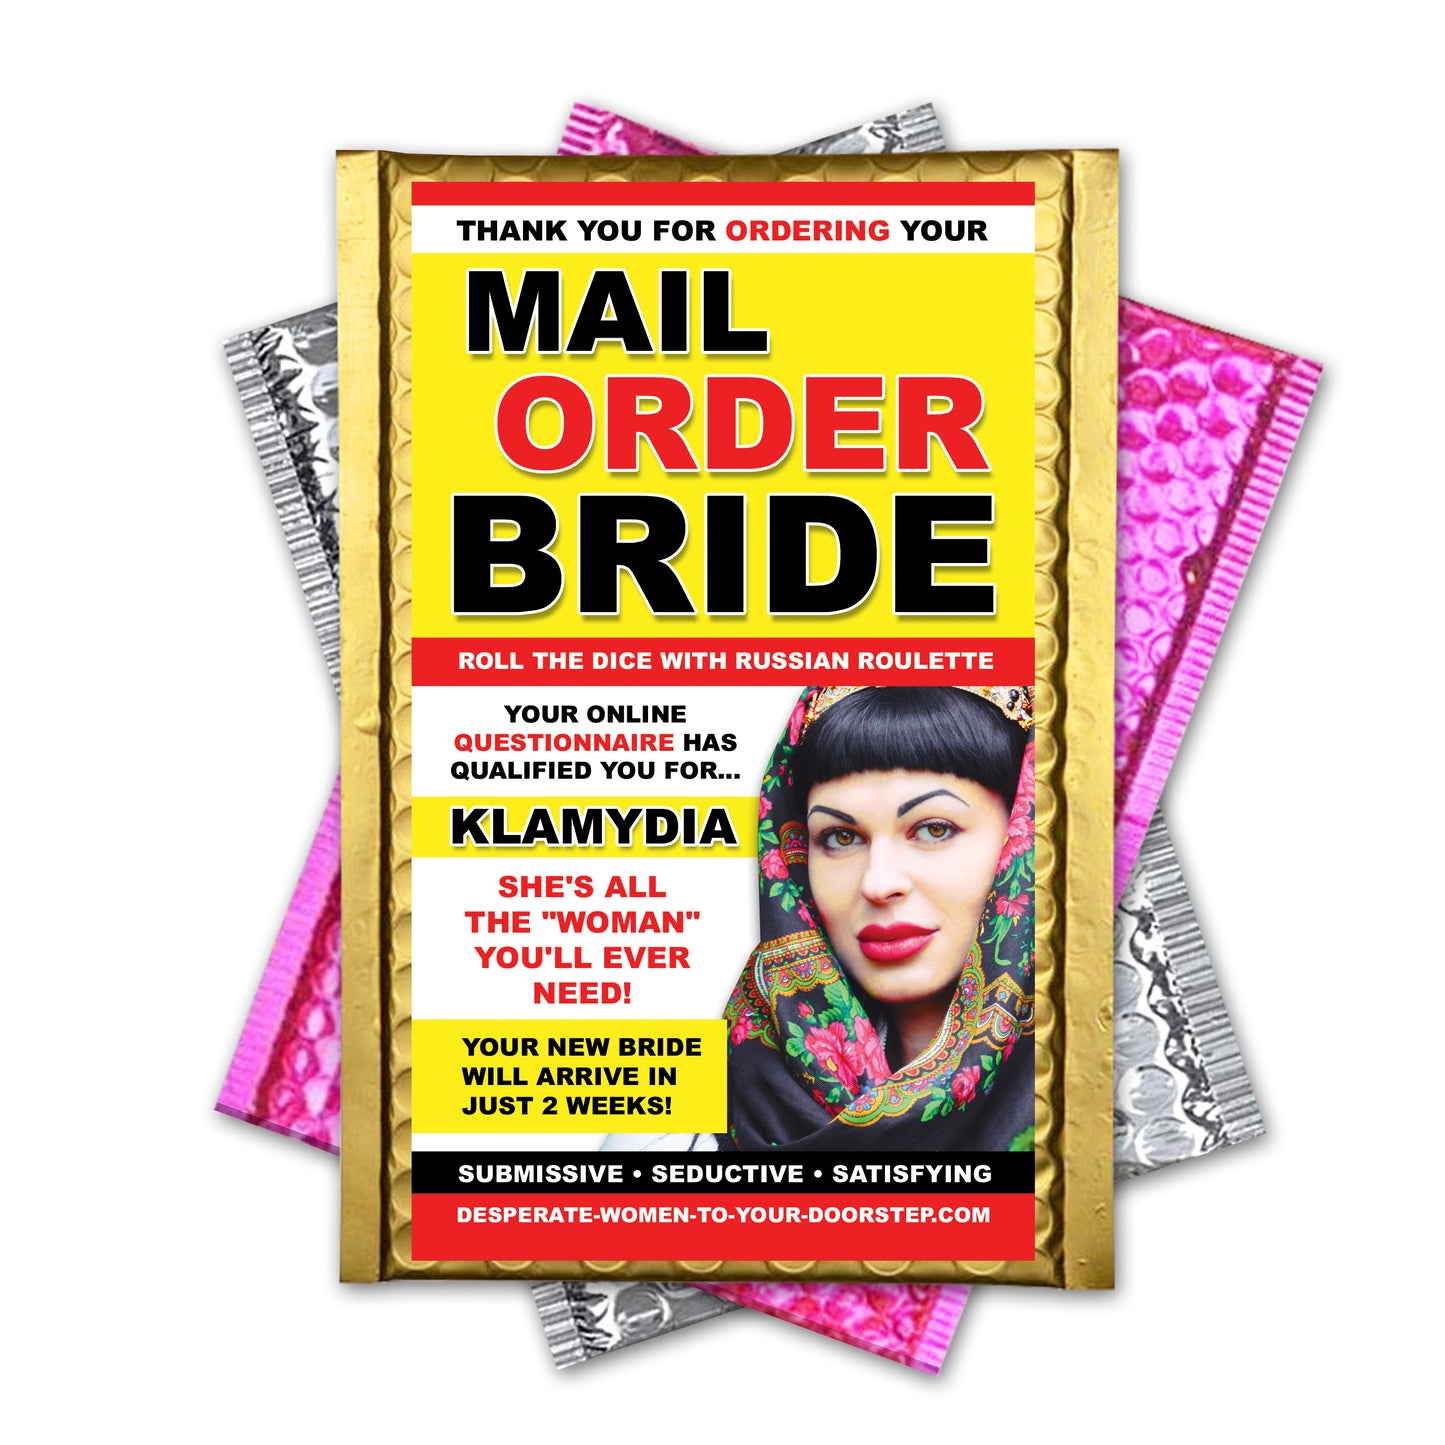 Mail Order Bride embarrassing prank envelope